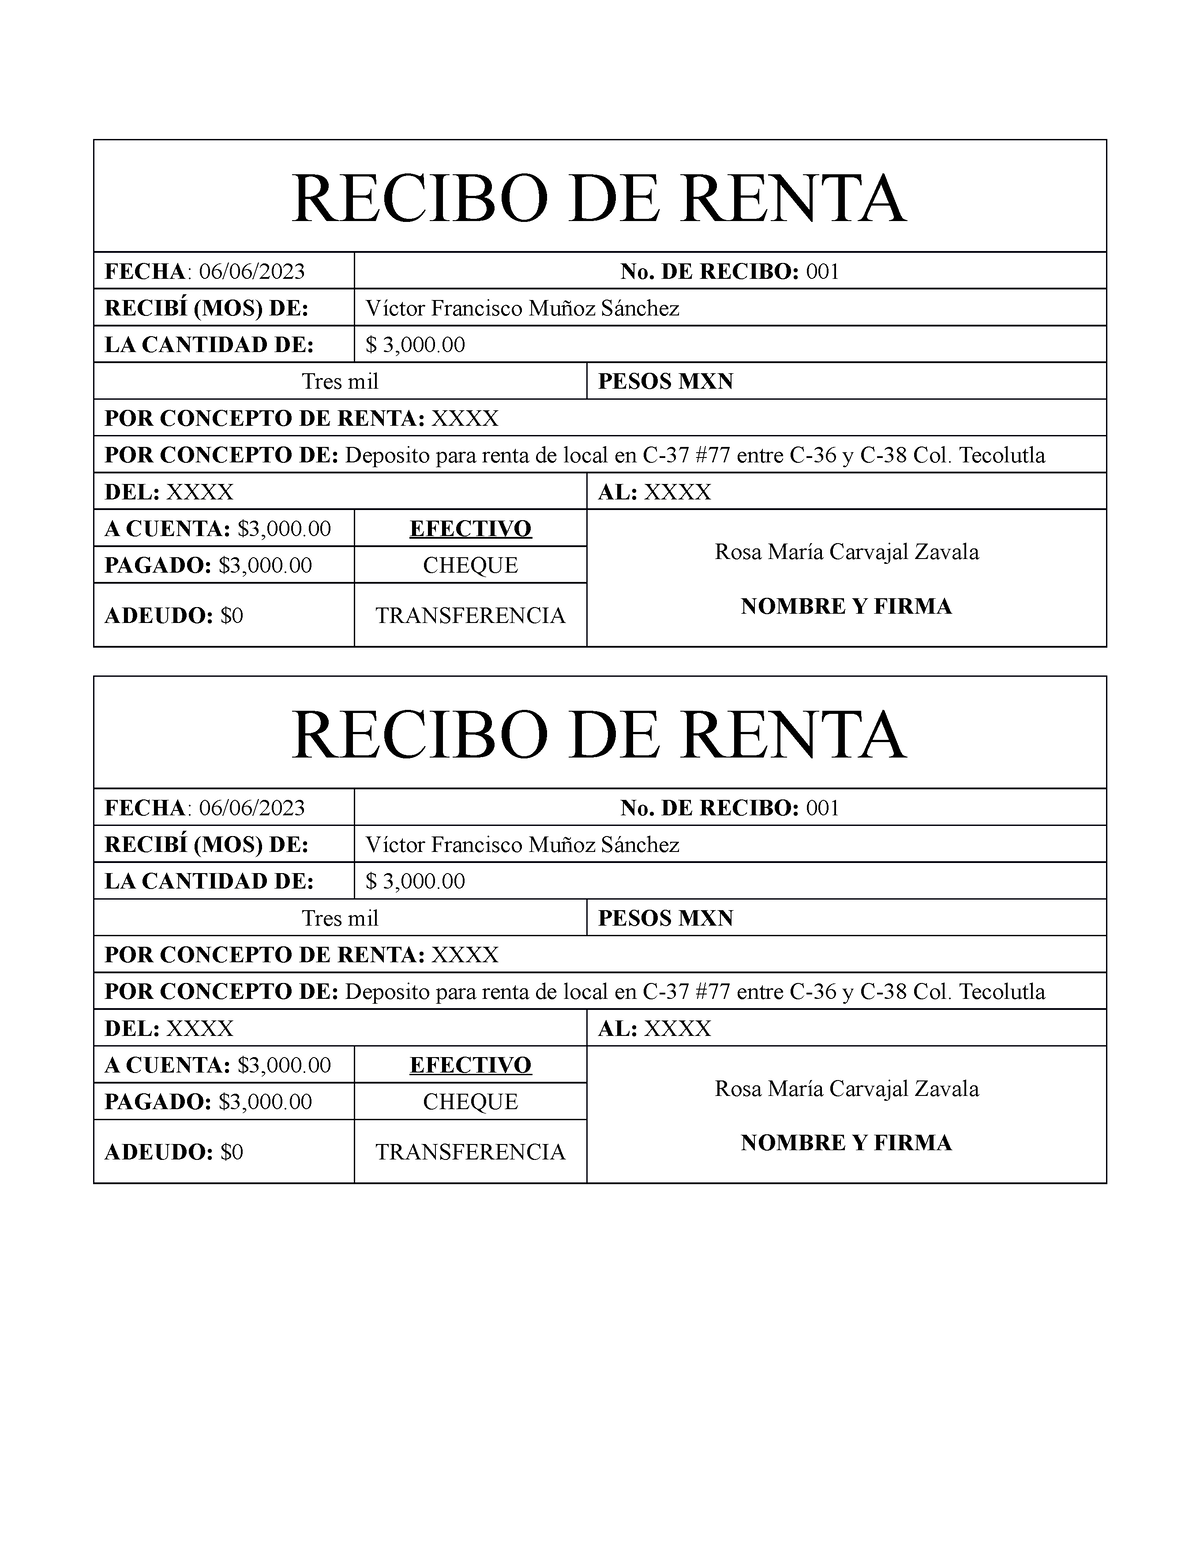 Ejemplo Recibo De Renta Recibo De Renta Fecha 06062023 No De Recibo 001 RecibÍ Mos De 5543